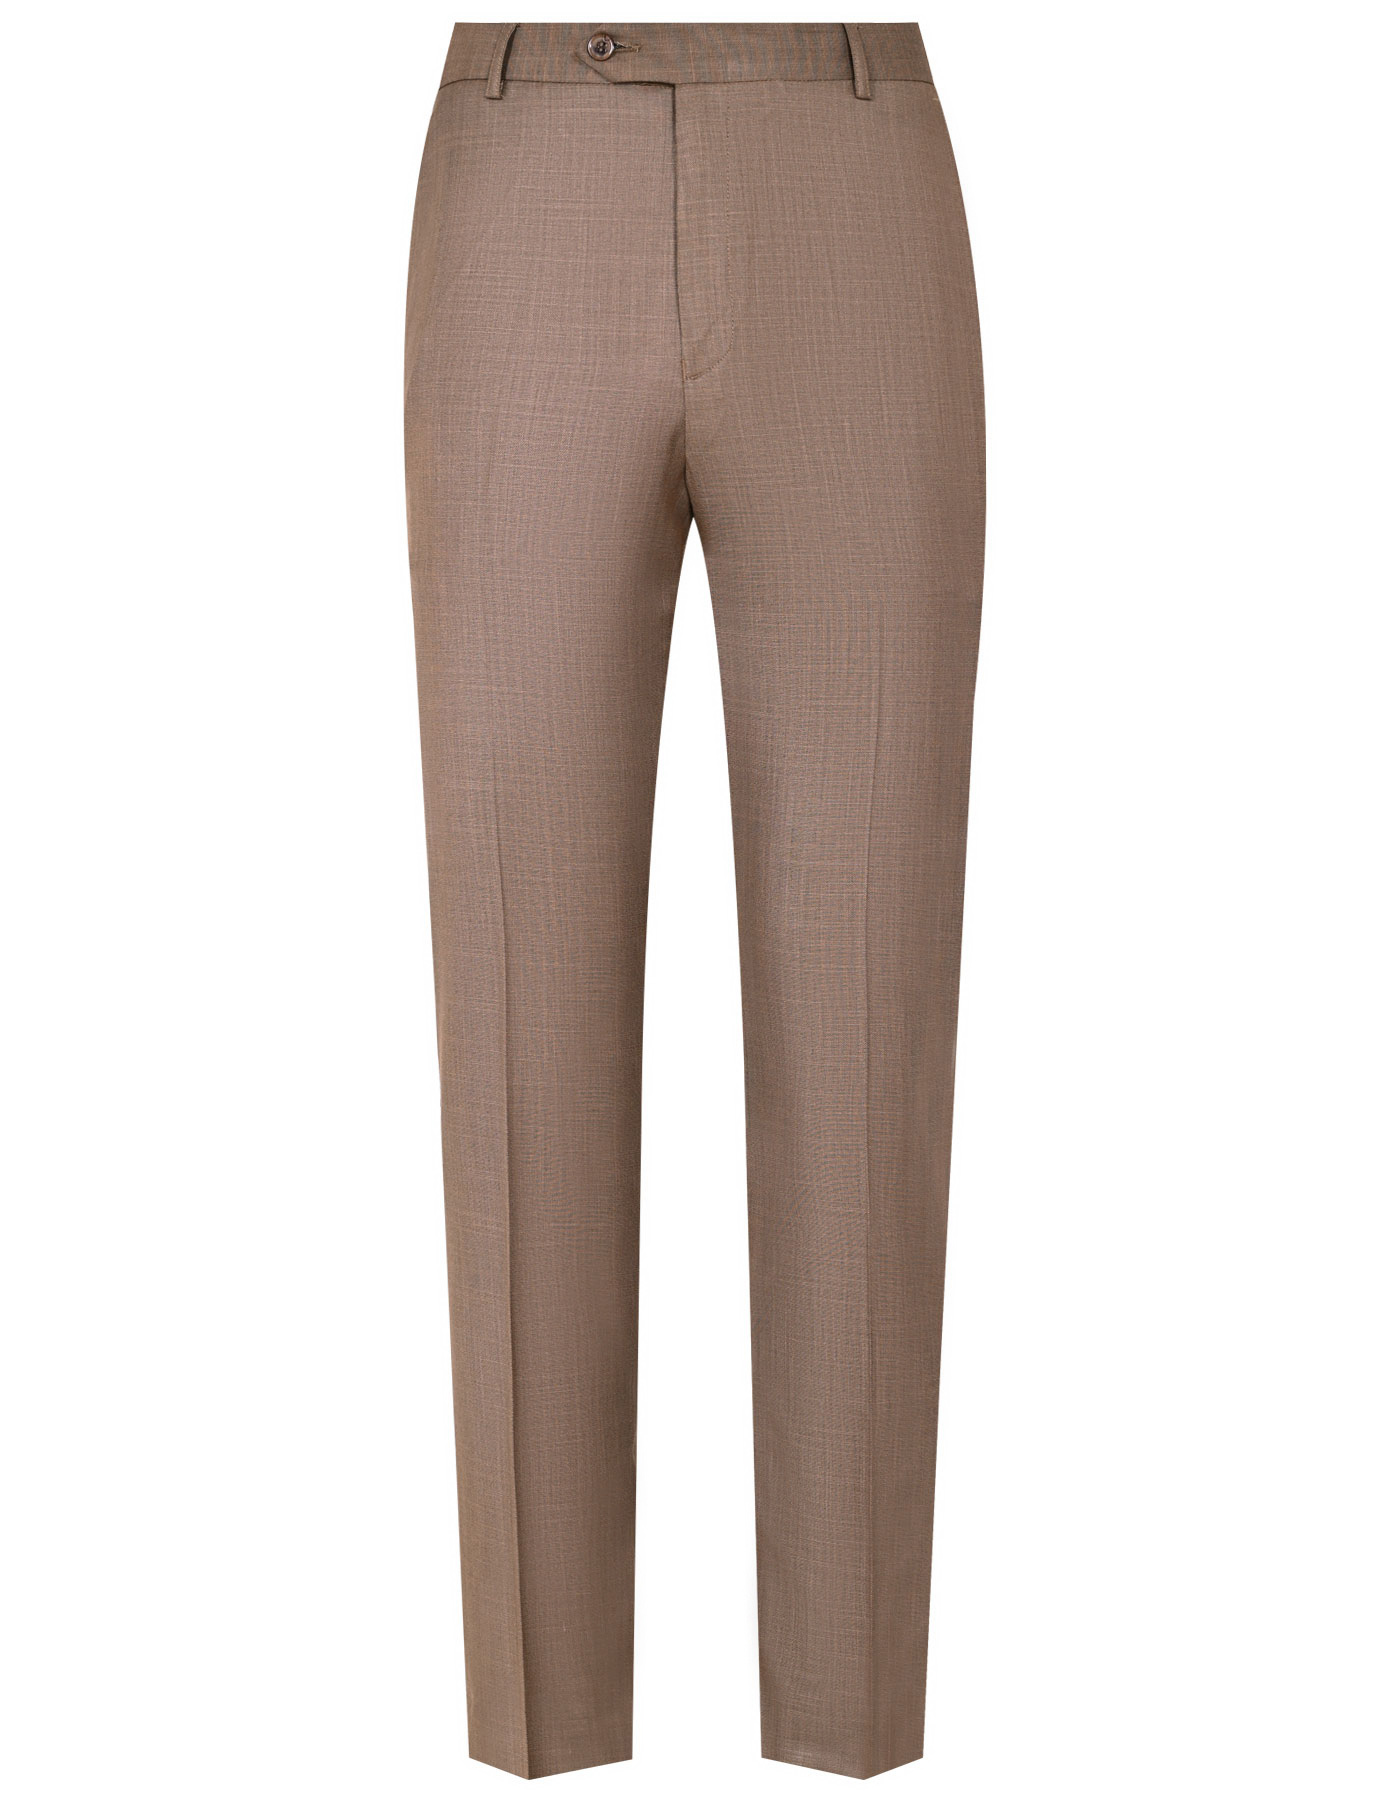 Formal Trouser L Brown 30 FT369-2C Uniworth TF369